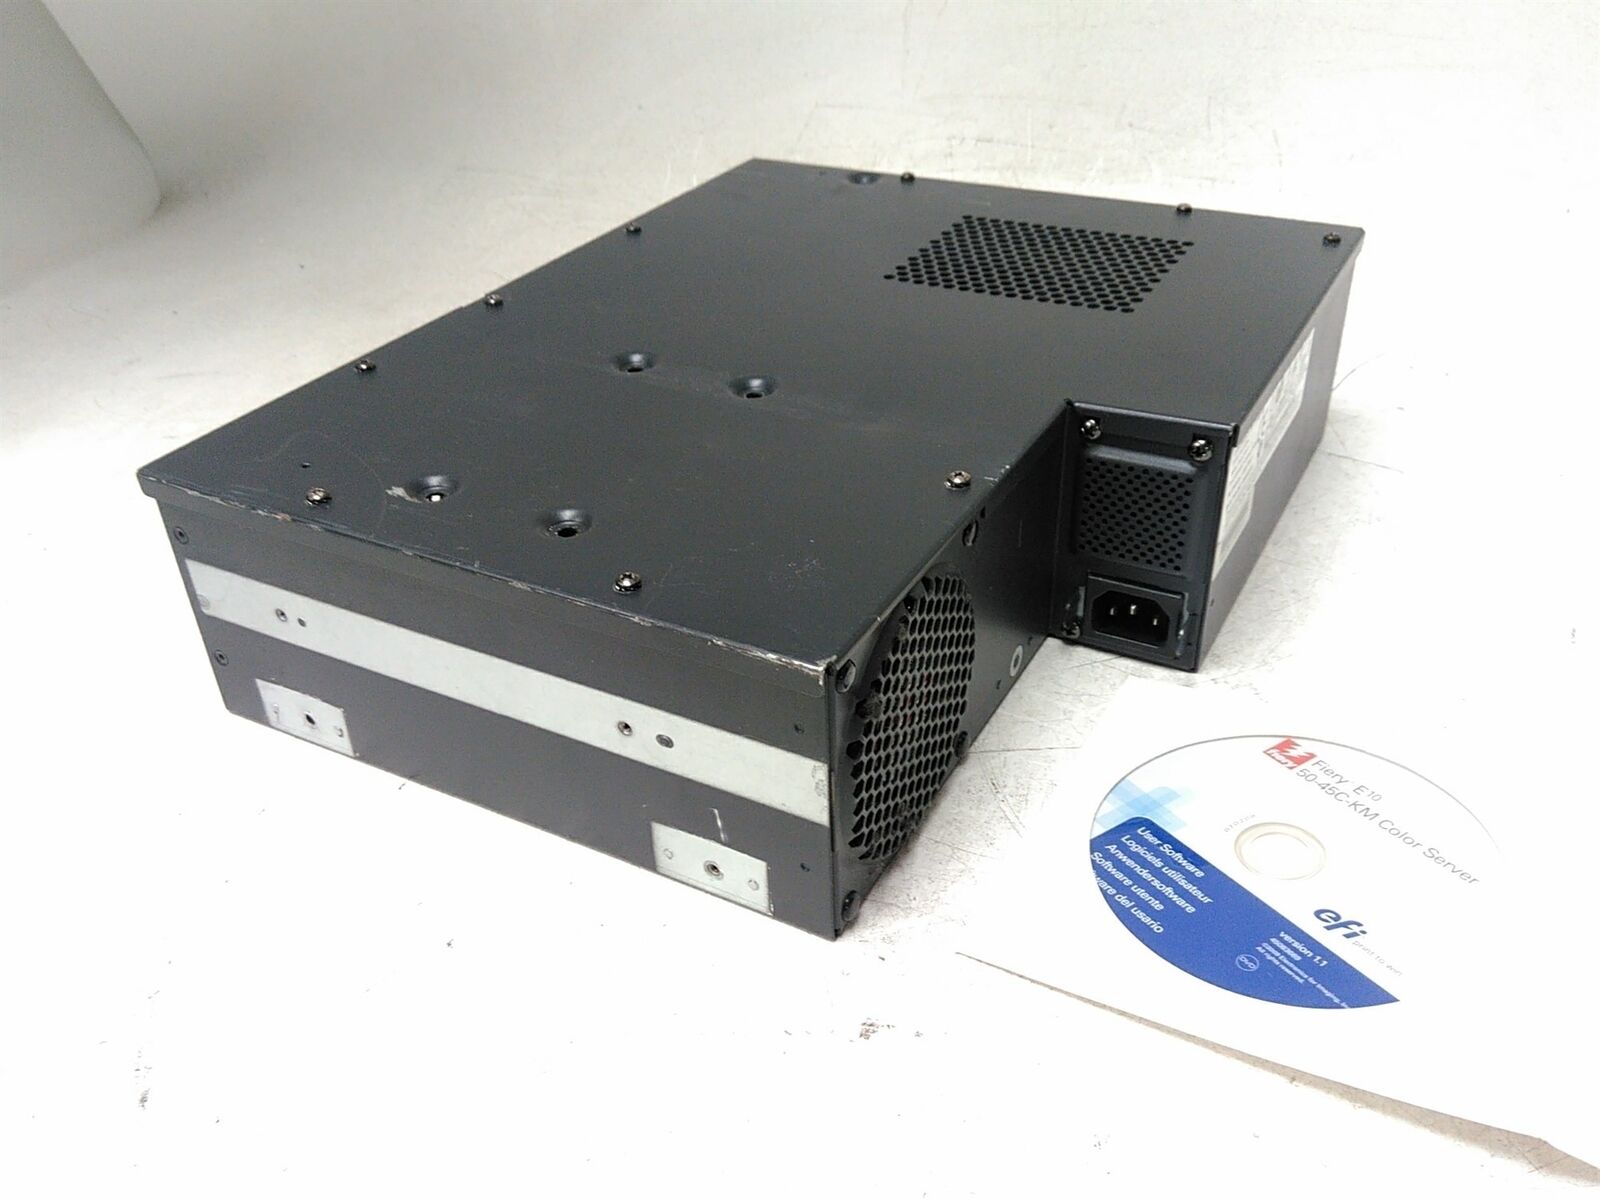 Fiery E10-01 Celeron 1.8GHz 512MB 0HD Printer Controller with User Software